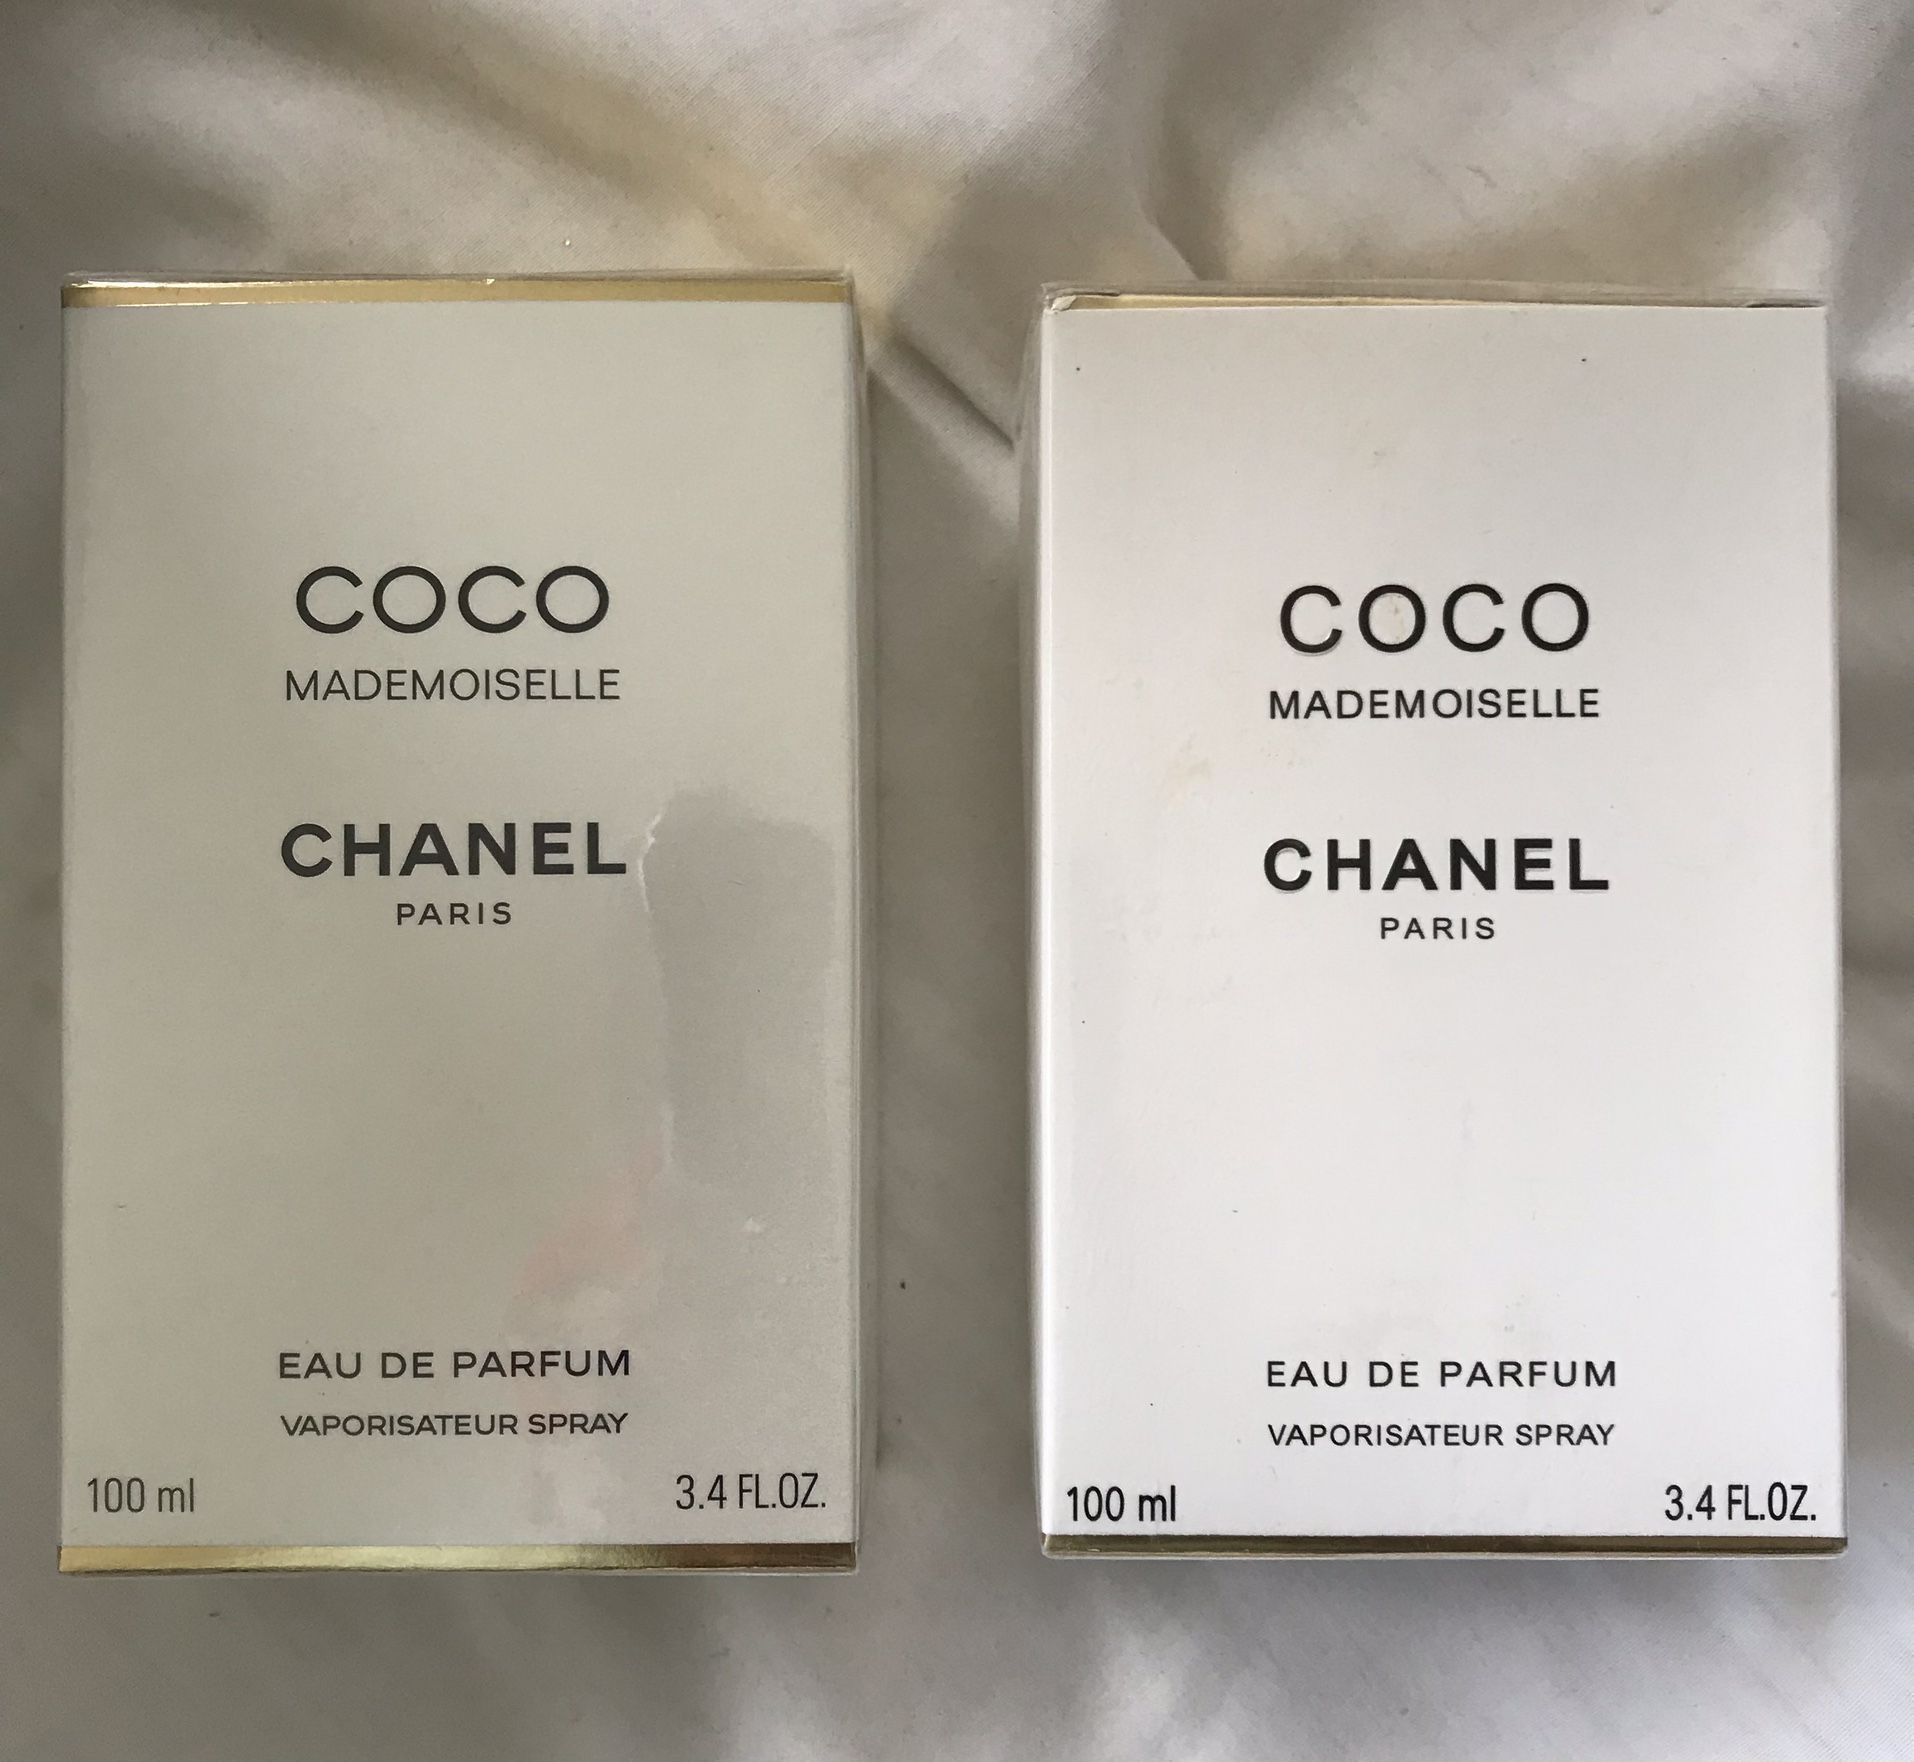 Original Coco Chanel Perfume 